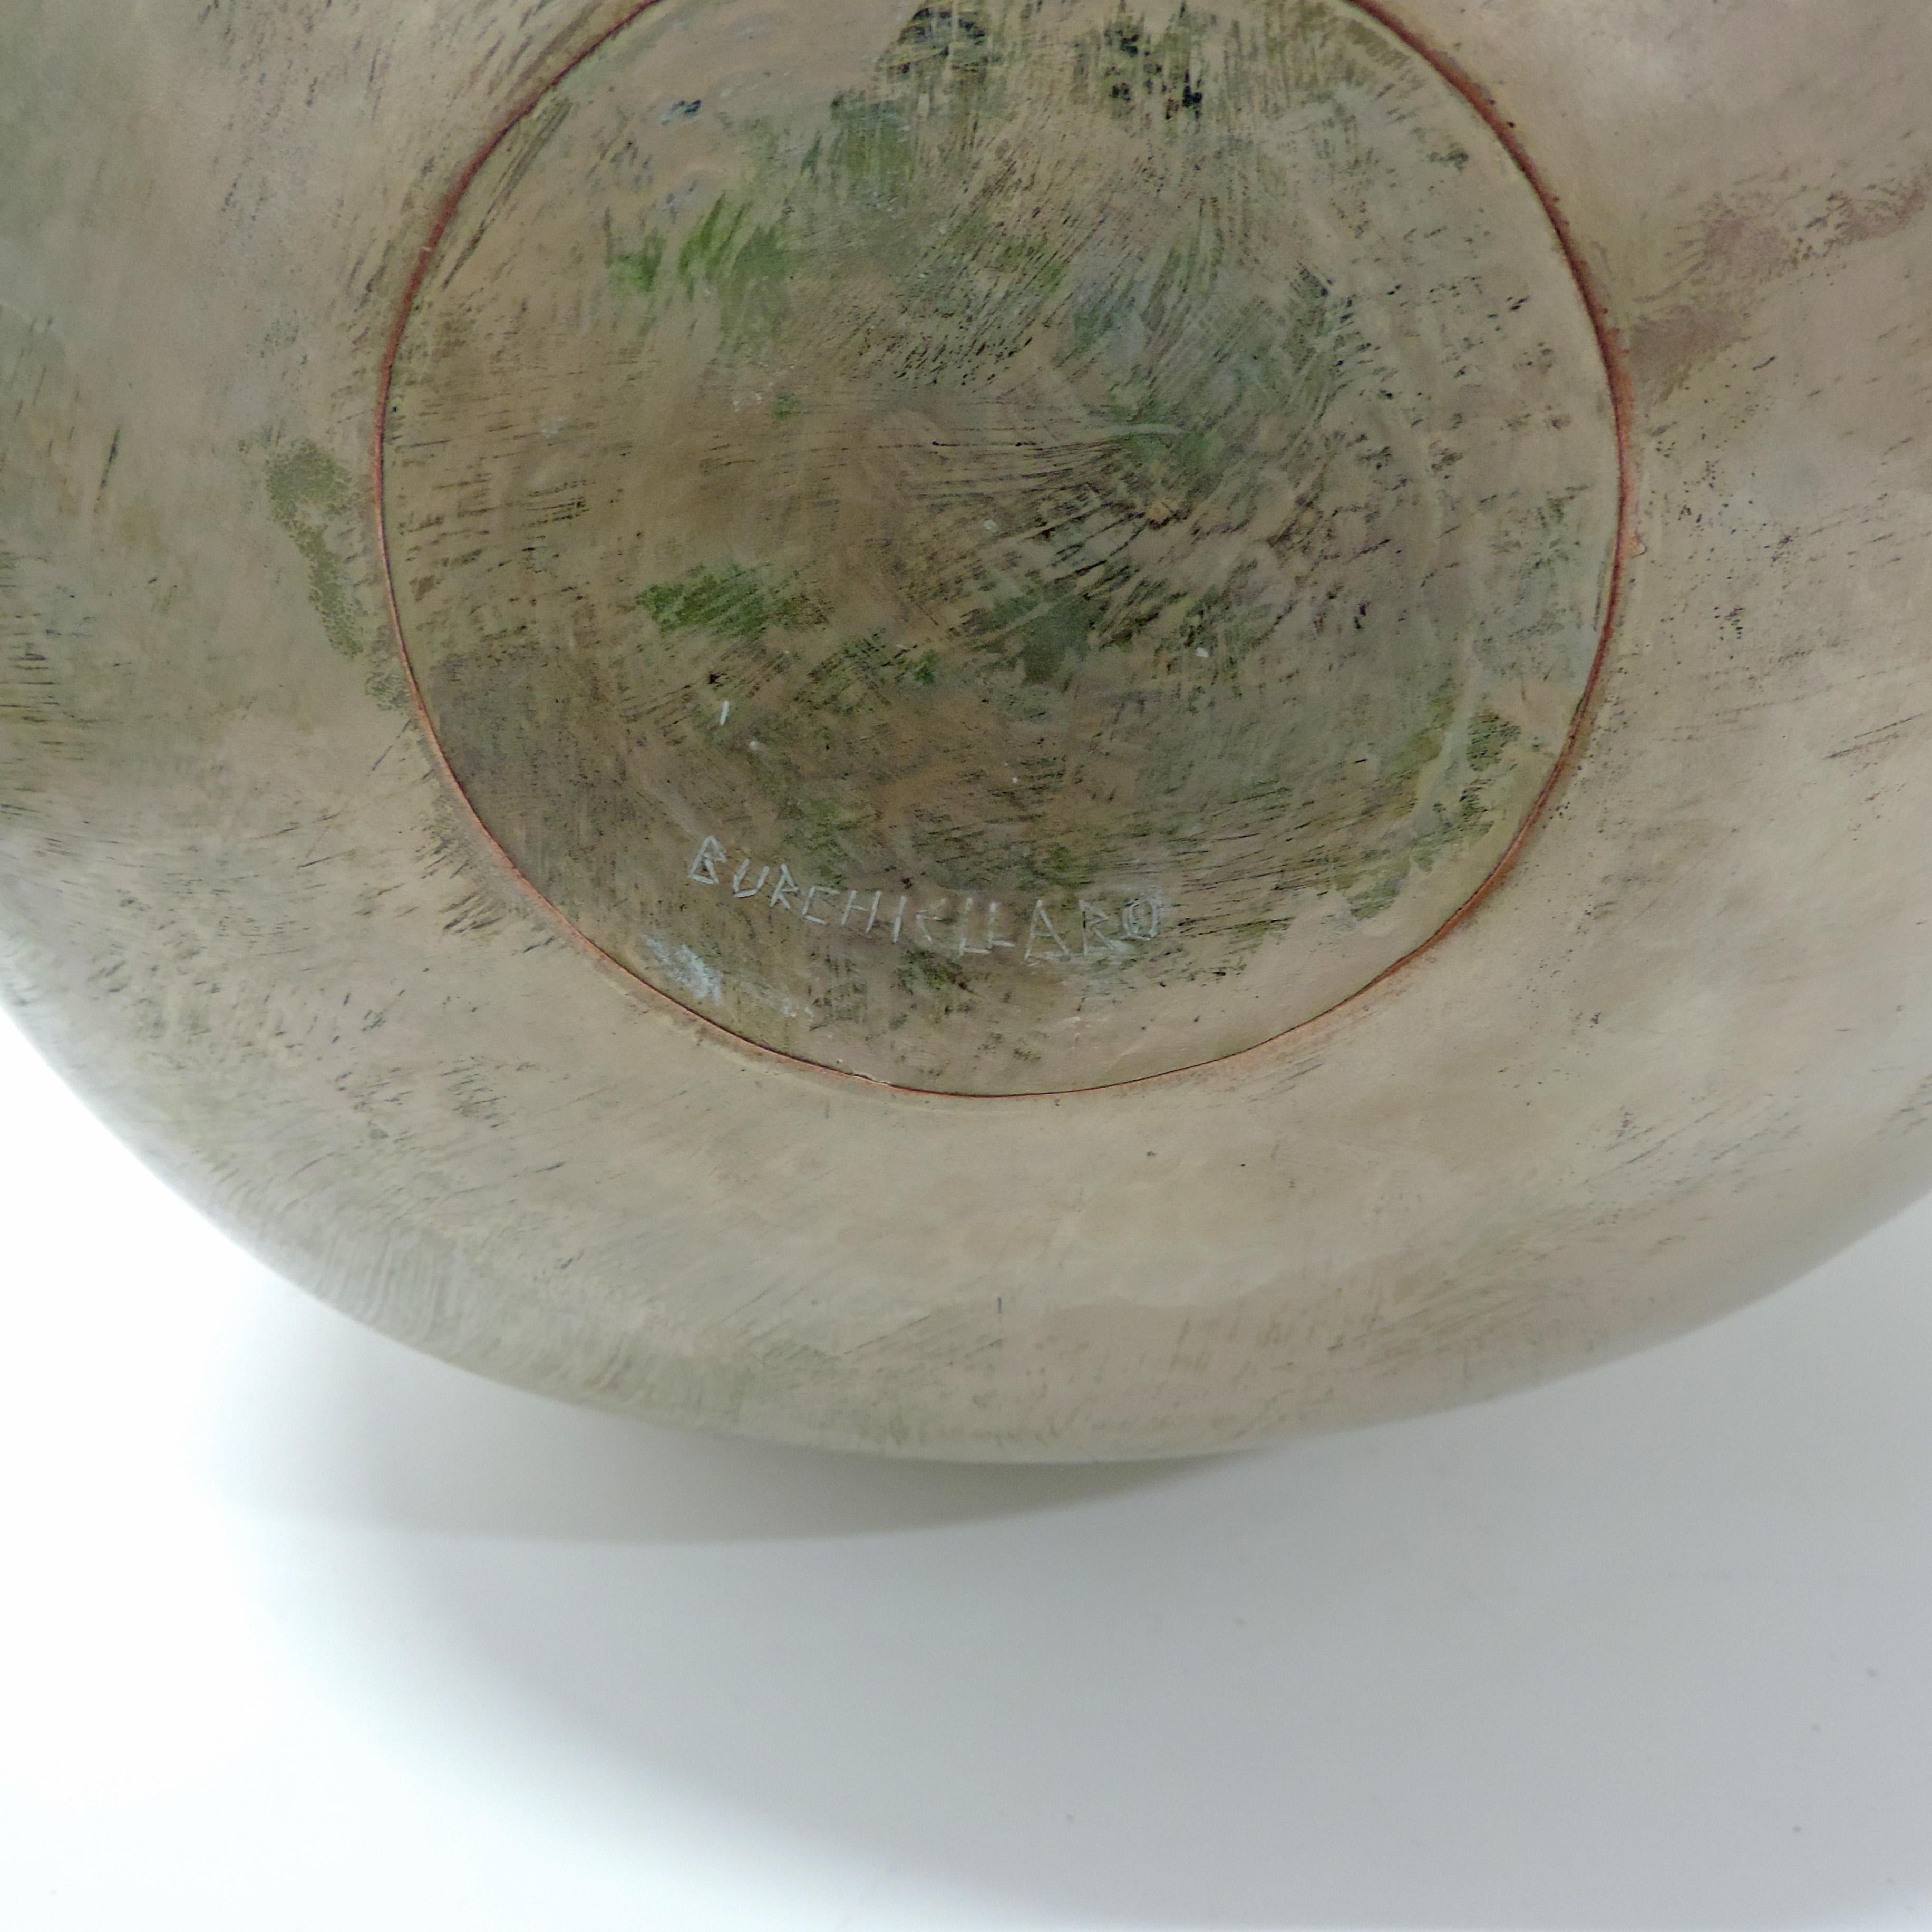 A fine Lorenzo Burchiellaro vase with lid in hammered metal.